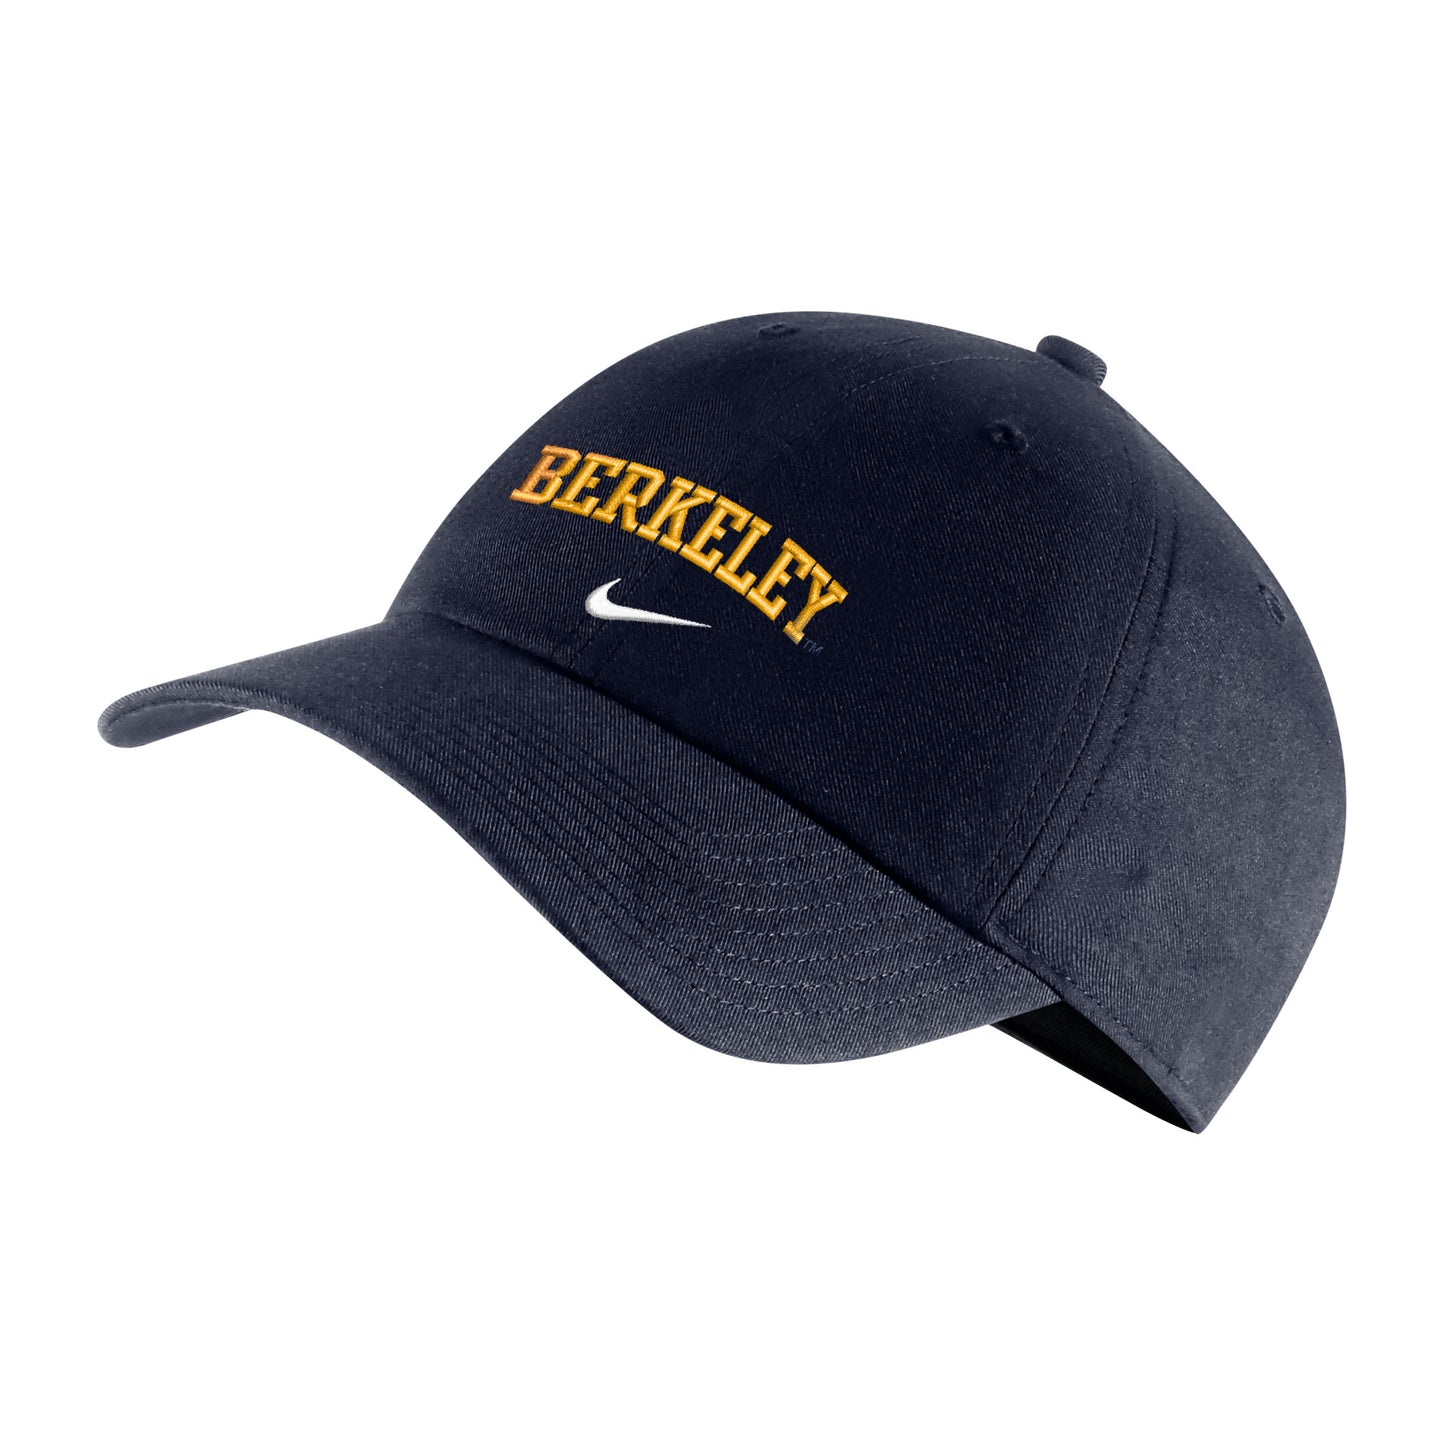 U.C. Berkeley embroidered Berkeley arch & Nike swoosh campus hat-Navy-Shop College Wear